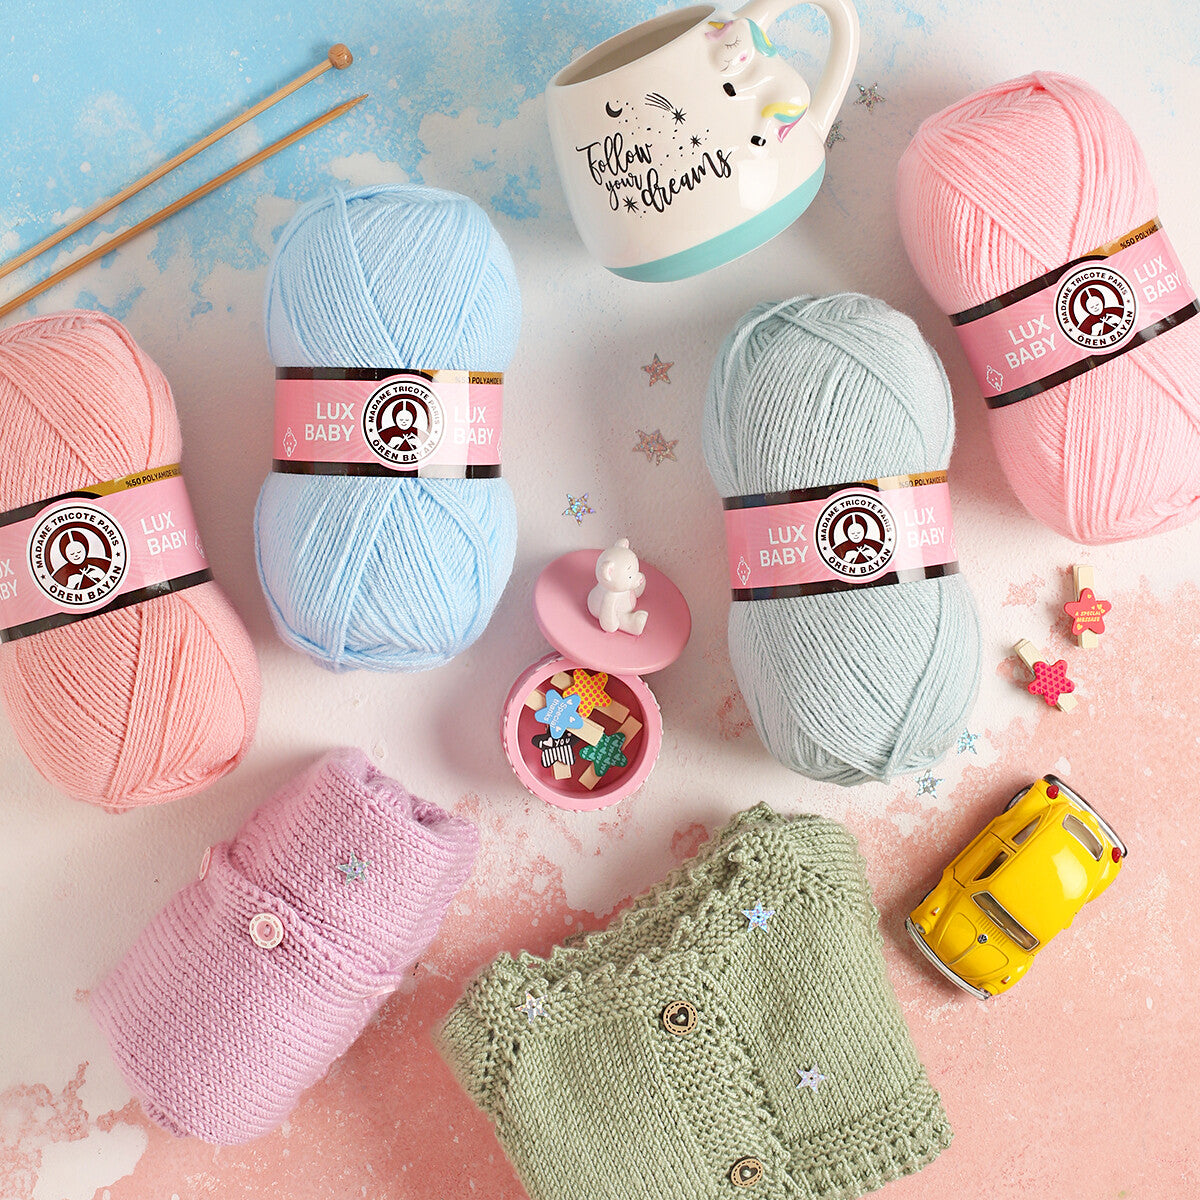 Madame Tricote Paris Lux Baby Knitting Yarn, Baby Blue - 011